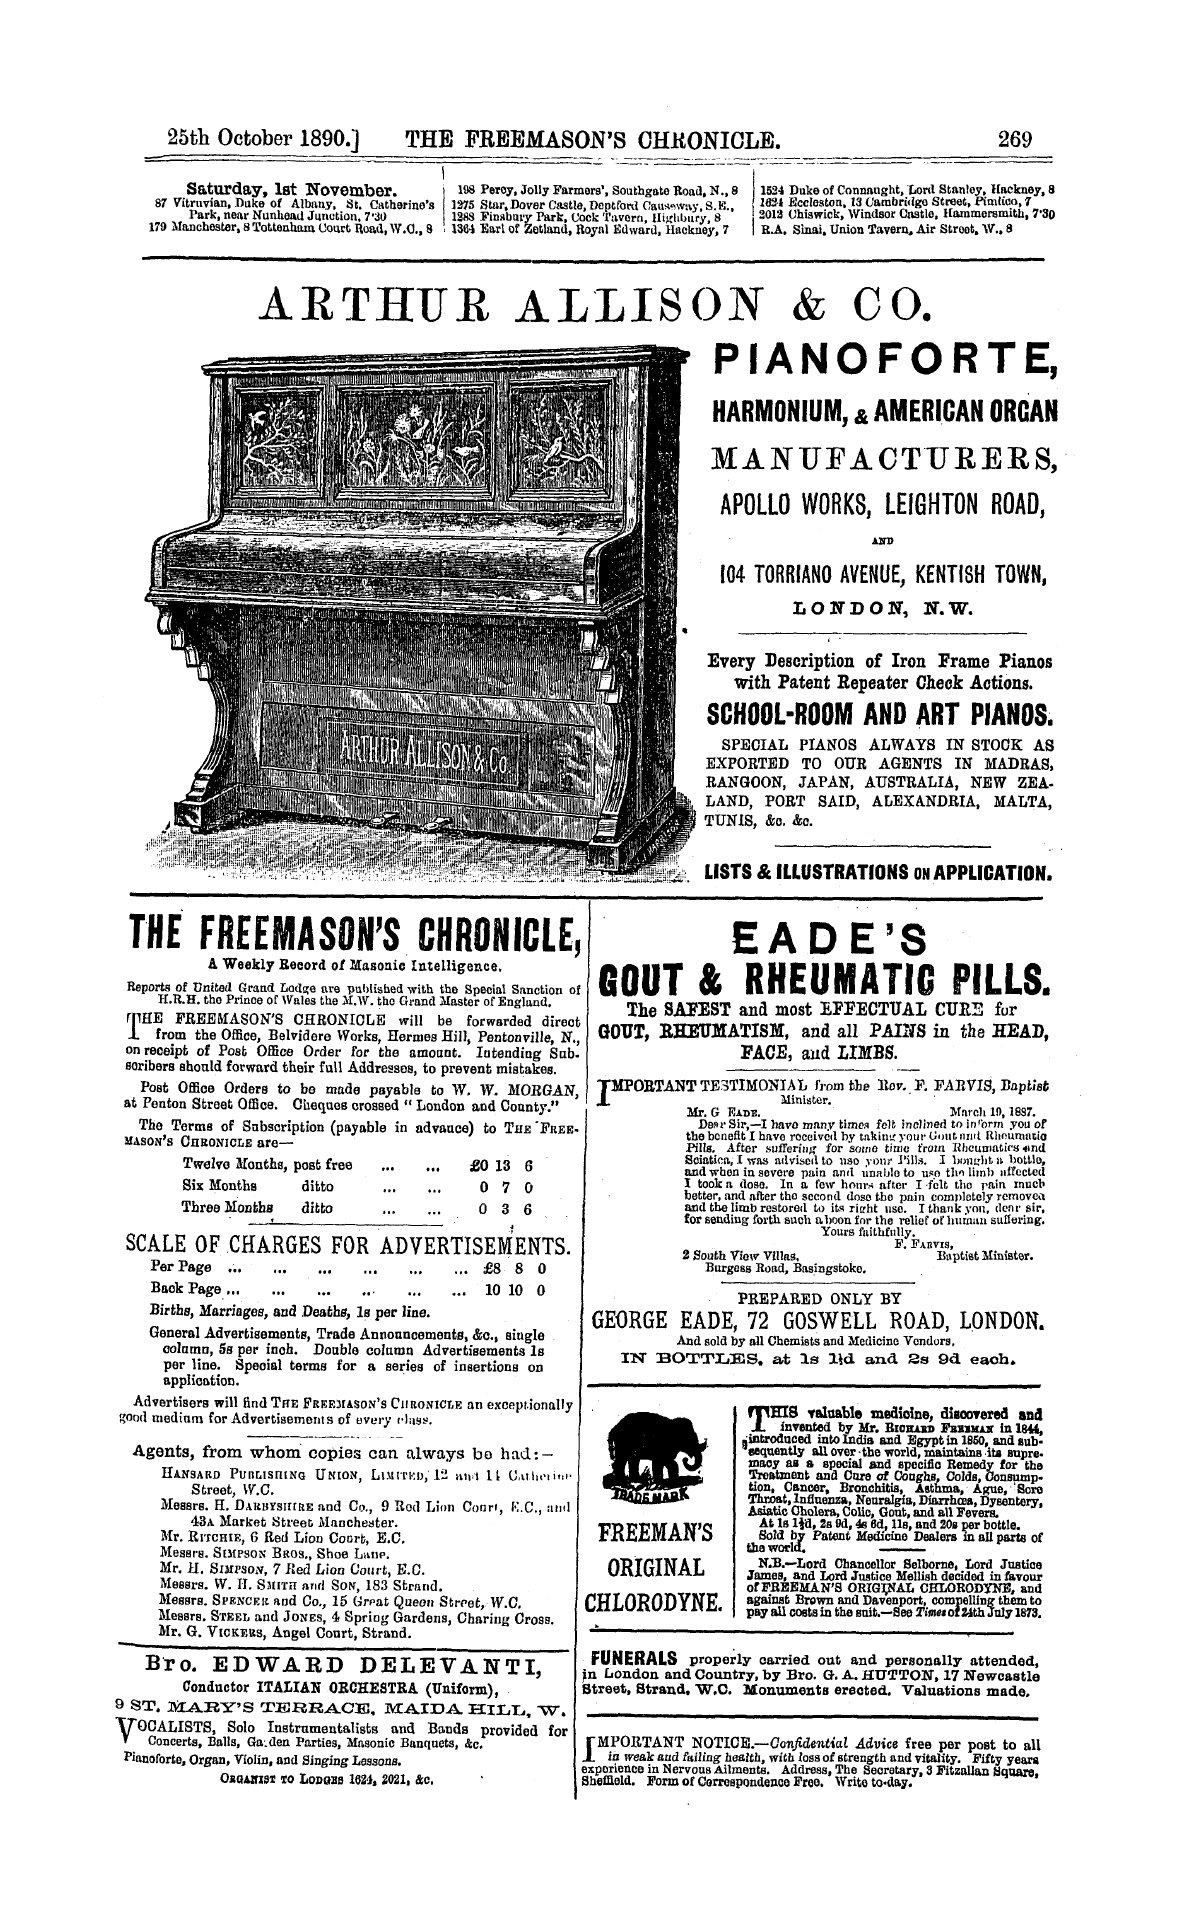 The Freemason's Chronicle: 1890-10-25: 13